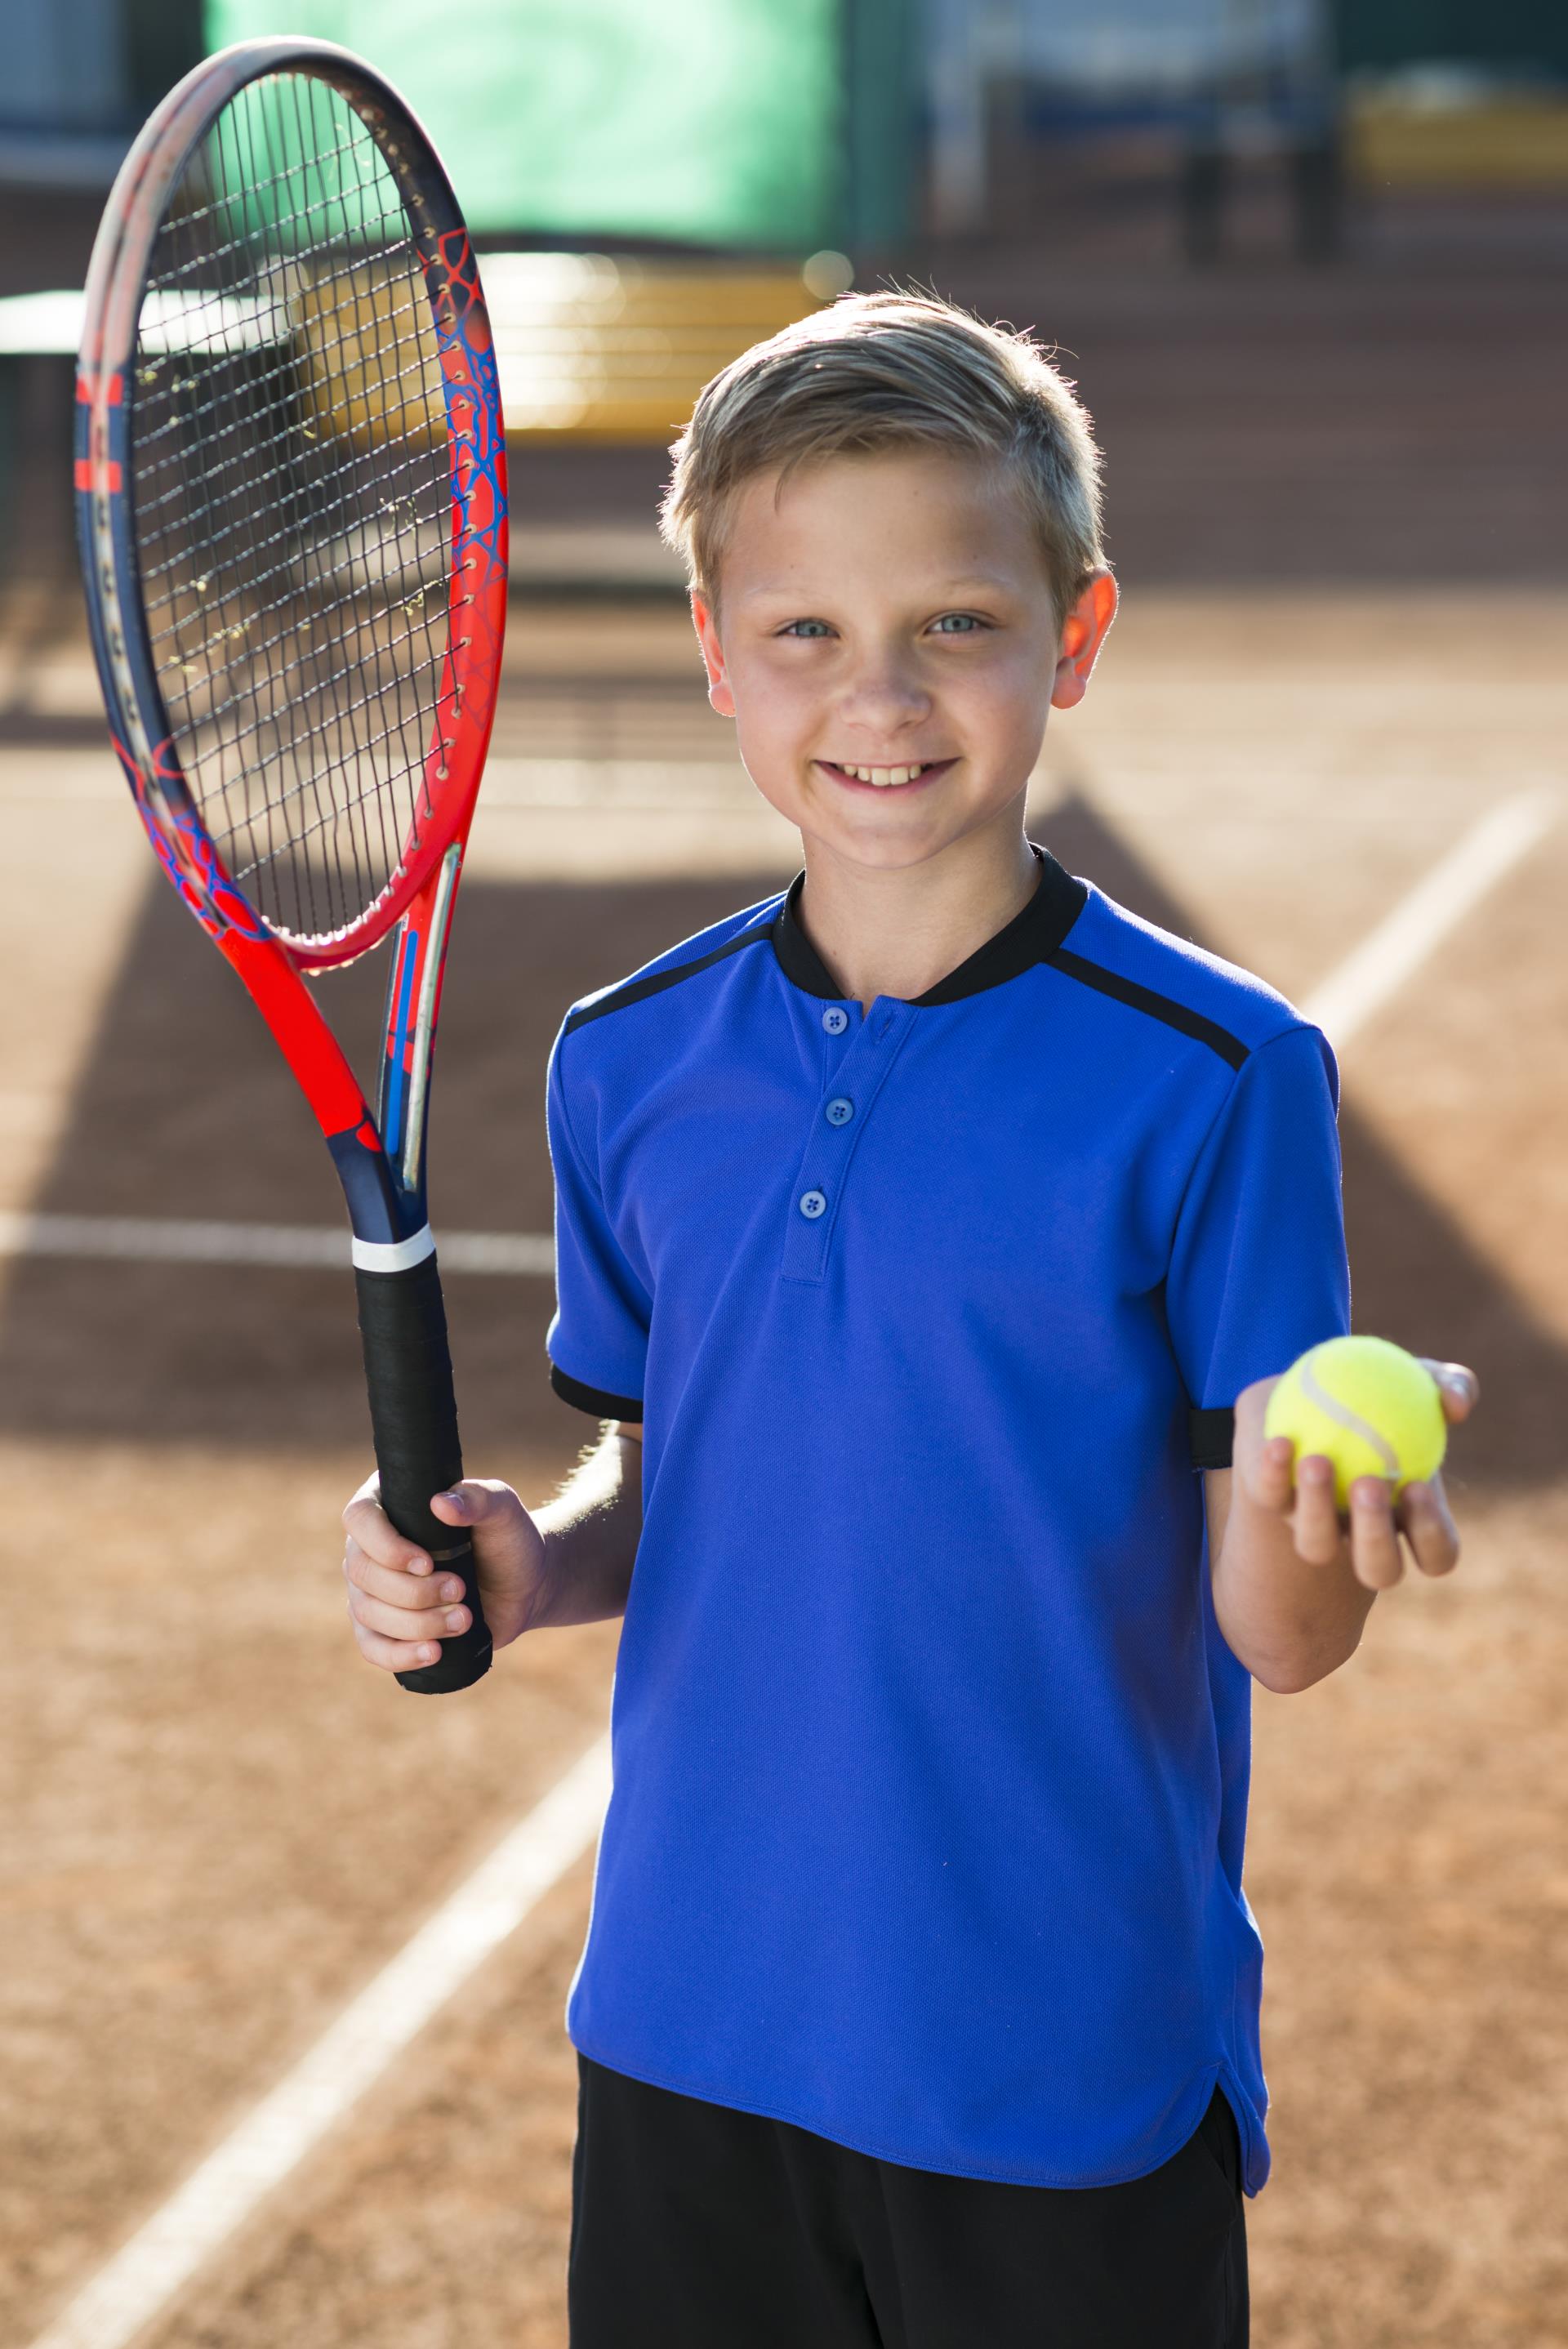 smiley-kid-holding-tennis-racket-ball